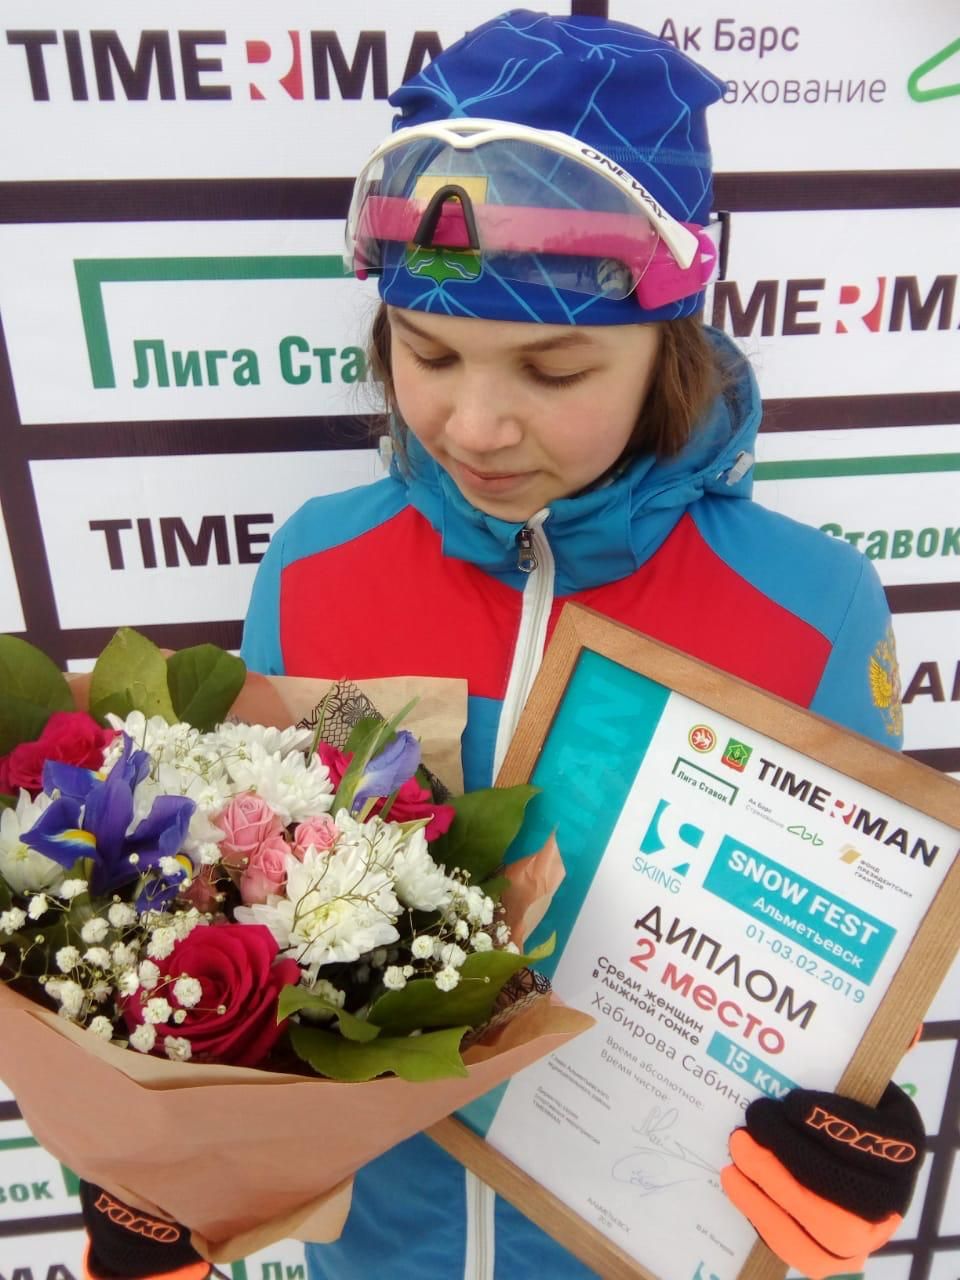 Әлмәт шәһәрендә TIMERMAN кышкы спорт төрләре буенча «SNOW FEST-2019» фестивалендә Саба районы спортчысы Руслан Миннегулов абсолют җиңүче булды